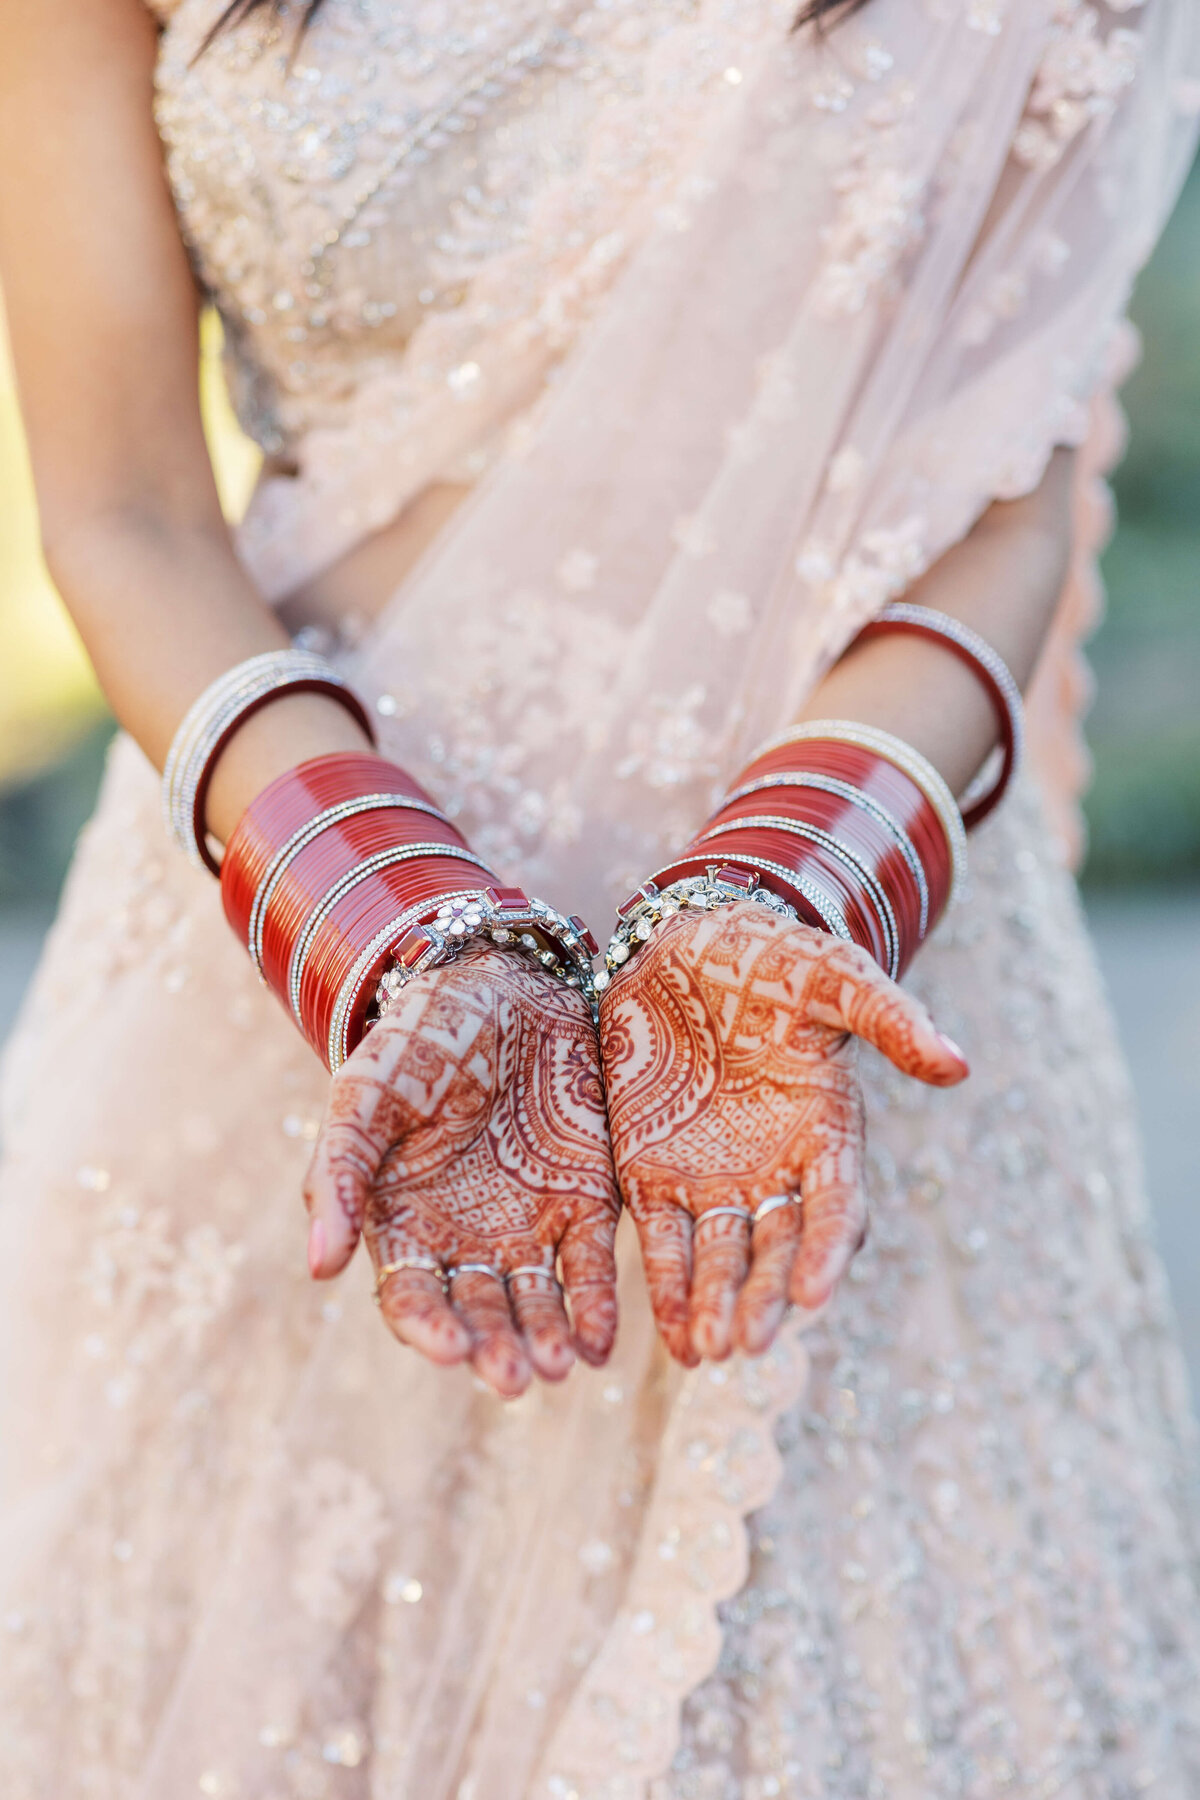 Indian bride displays her wedding day henna.